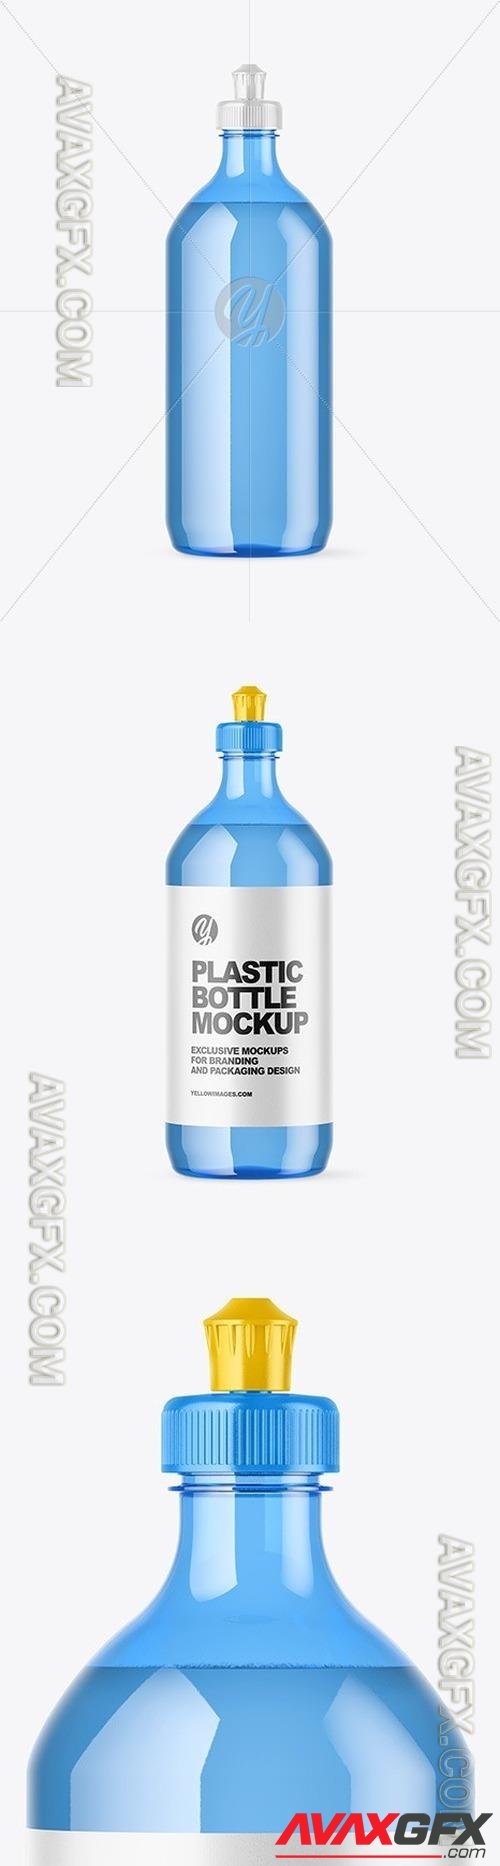 Blue Plastic Bottle with Squeeze Cap Mockup 47609 TIF